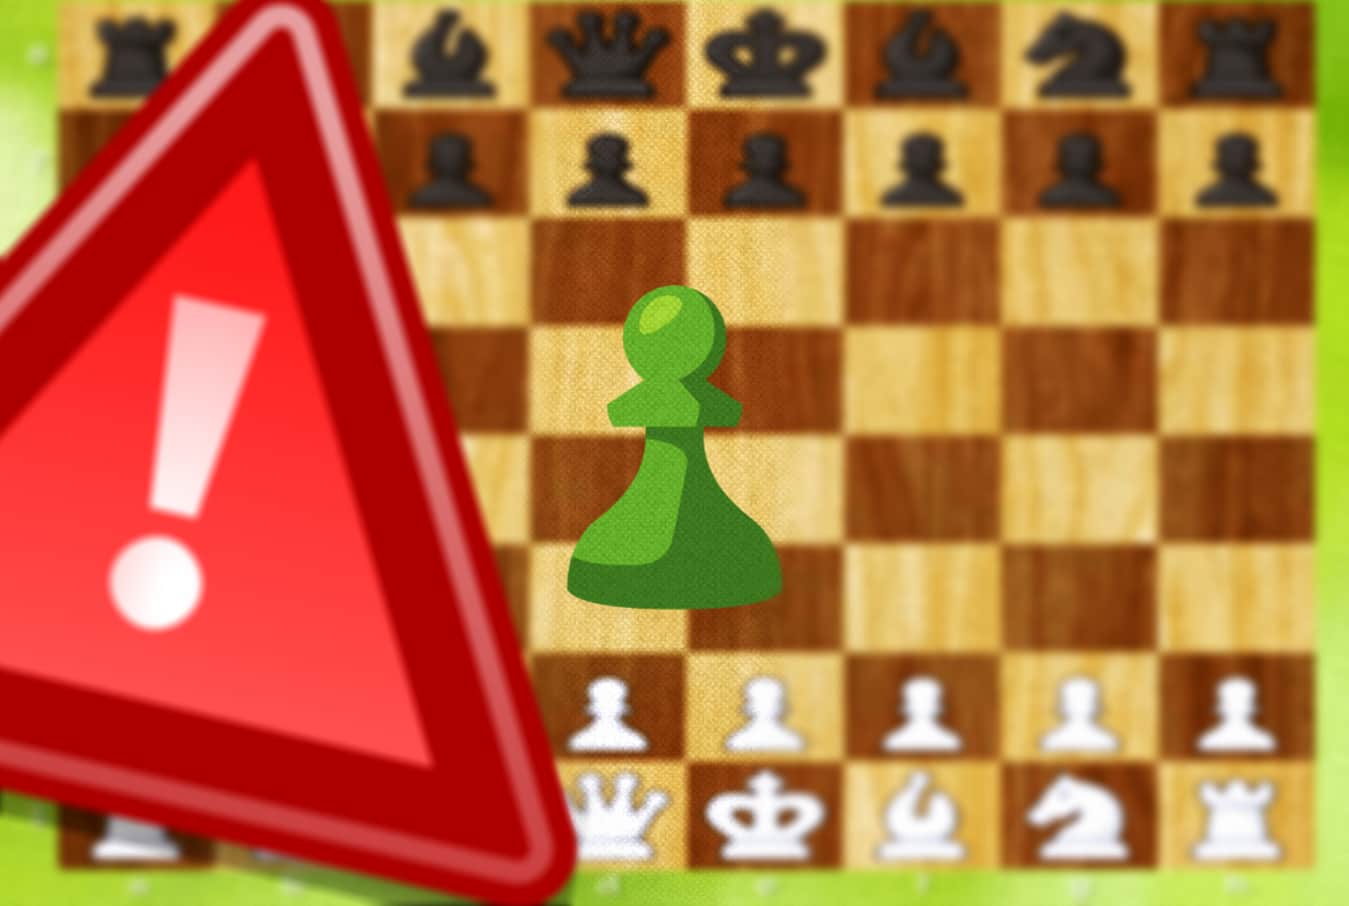 api-bug-found-in-chess-com-50-million-cu